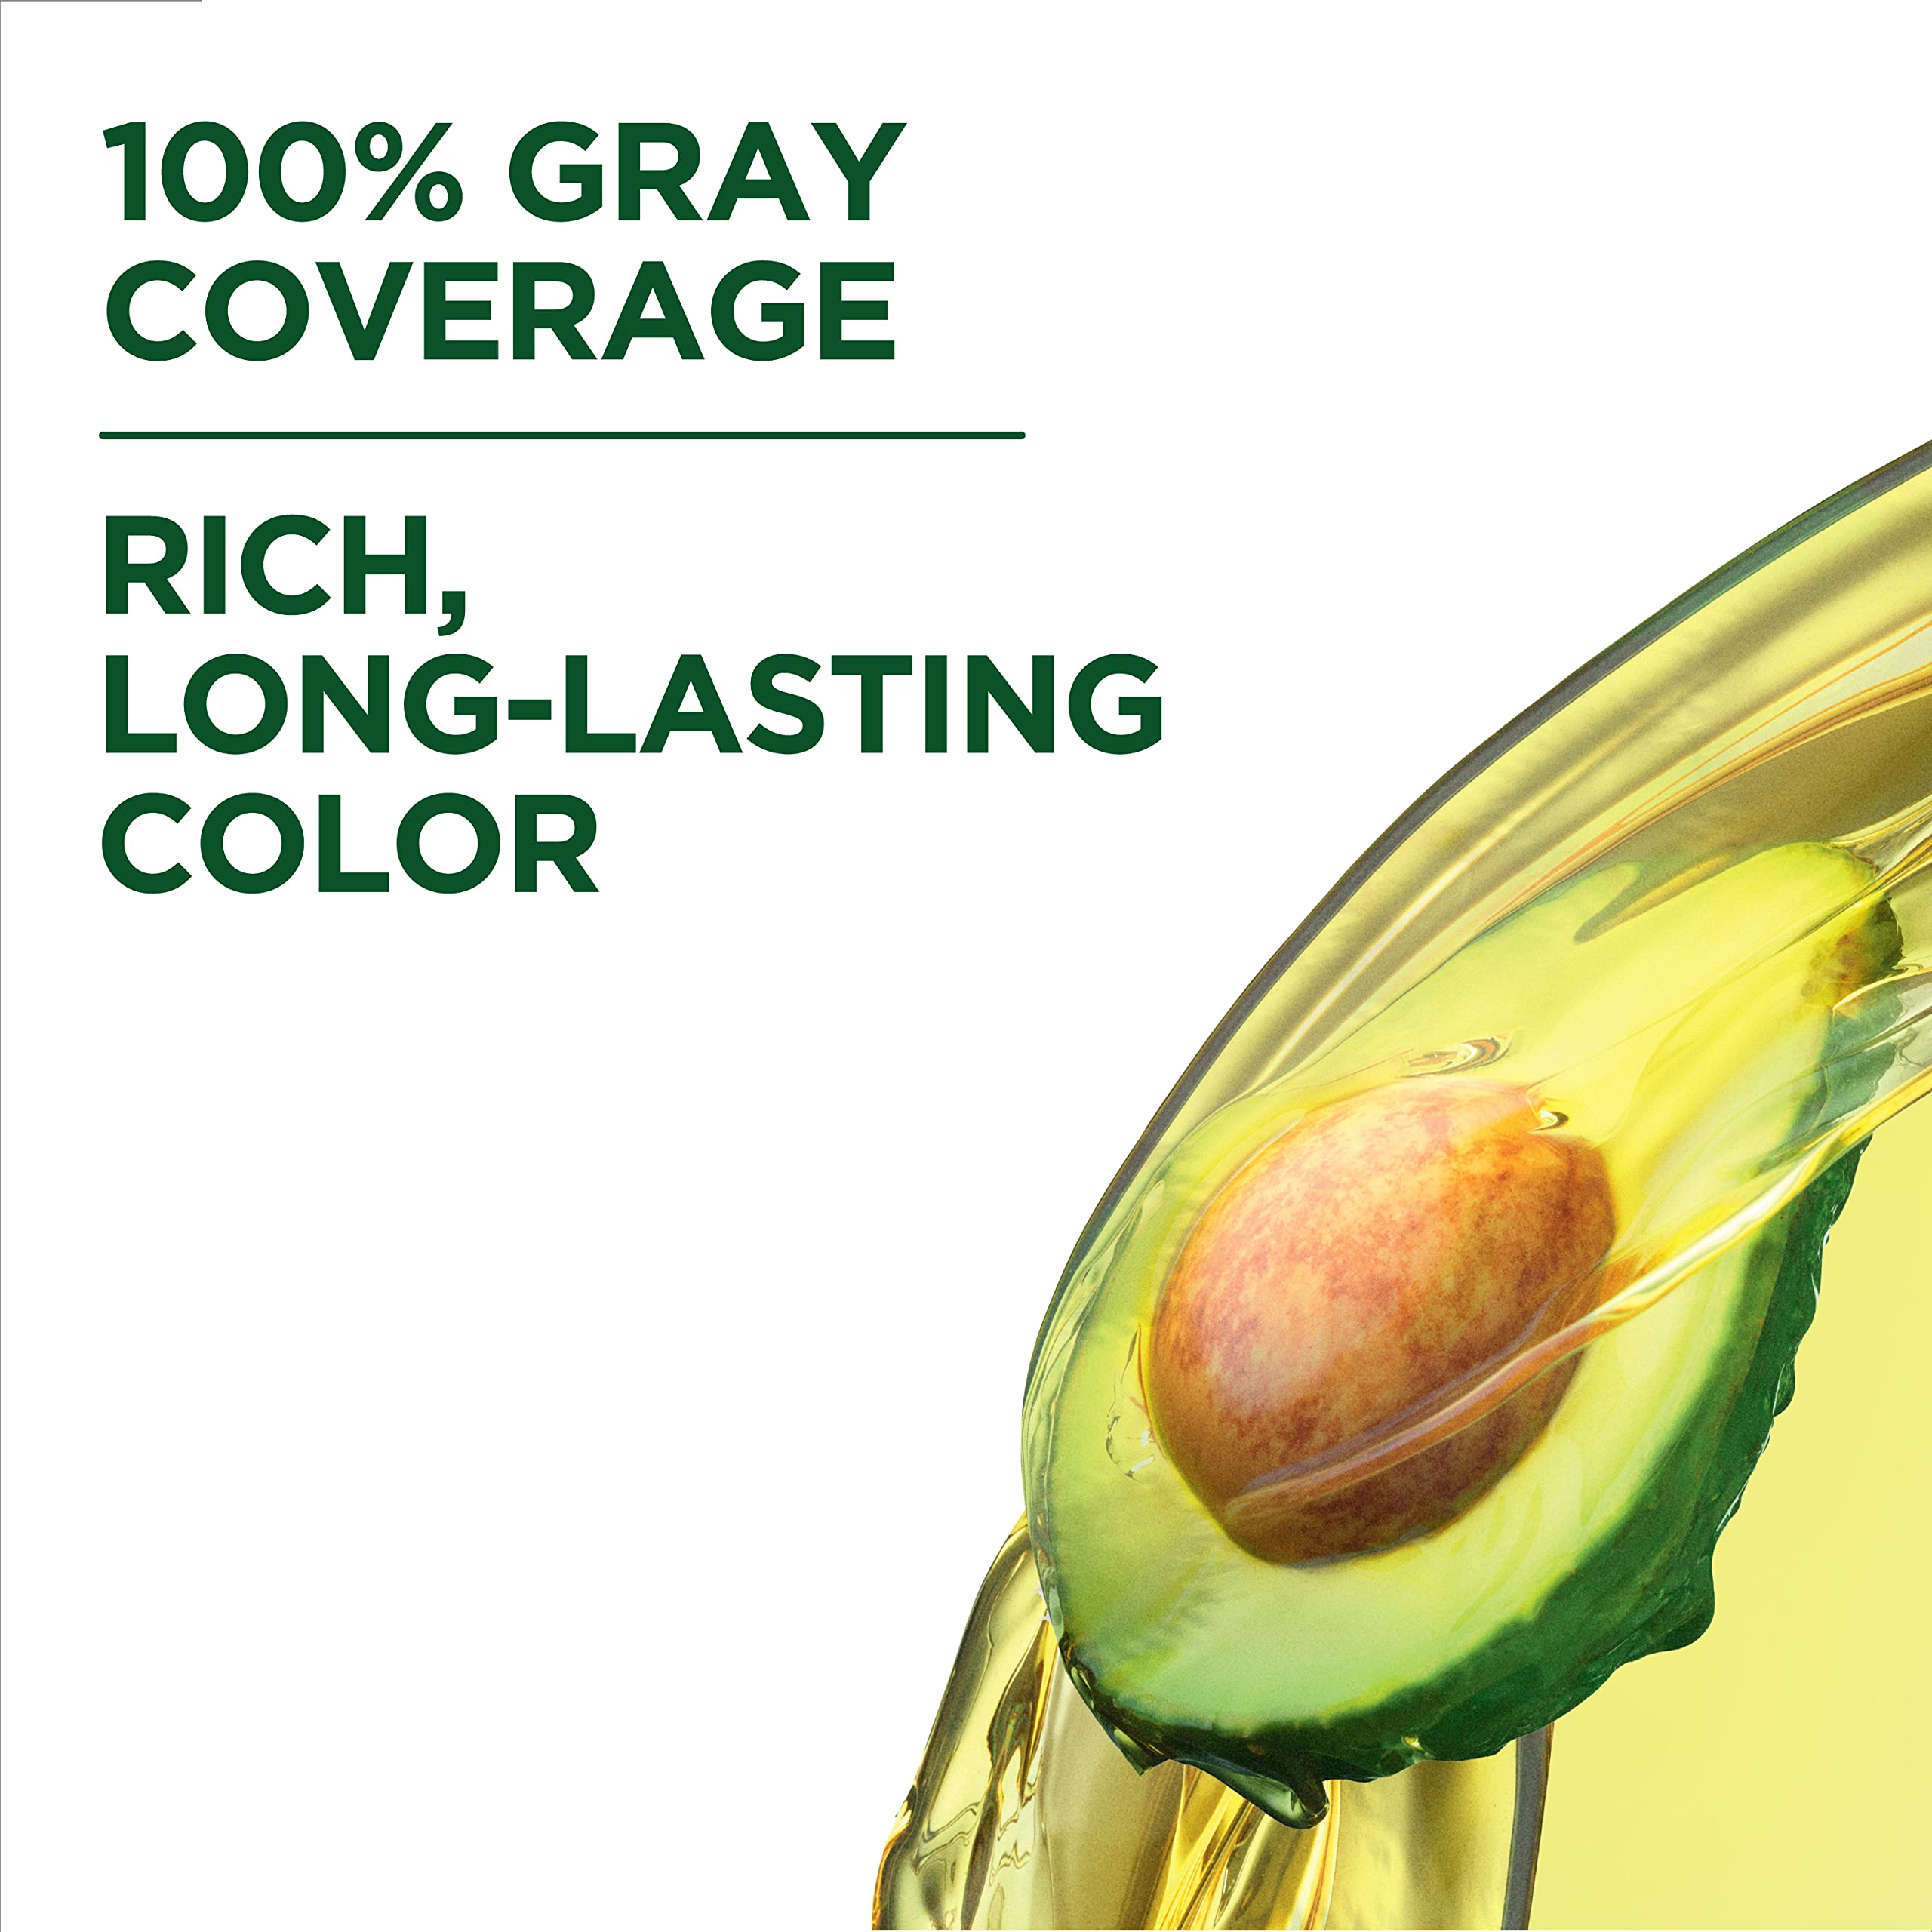 Garnier Hair Color Nutrisse Nourishing Creme, 61 Light Ash Brown (Mochaccino) Permanent Hair Dye, 2 Count (Packaging May Vary)